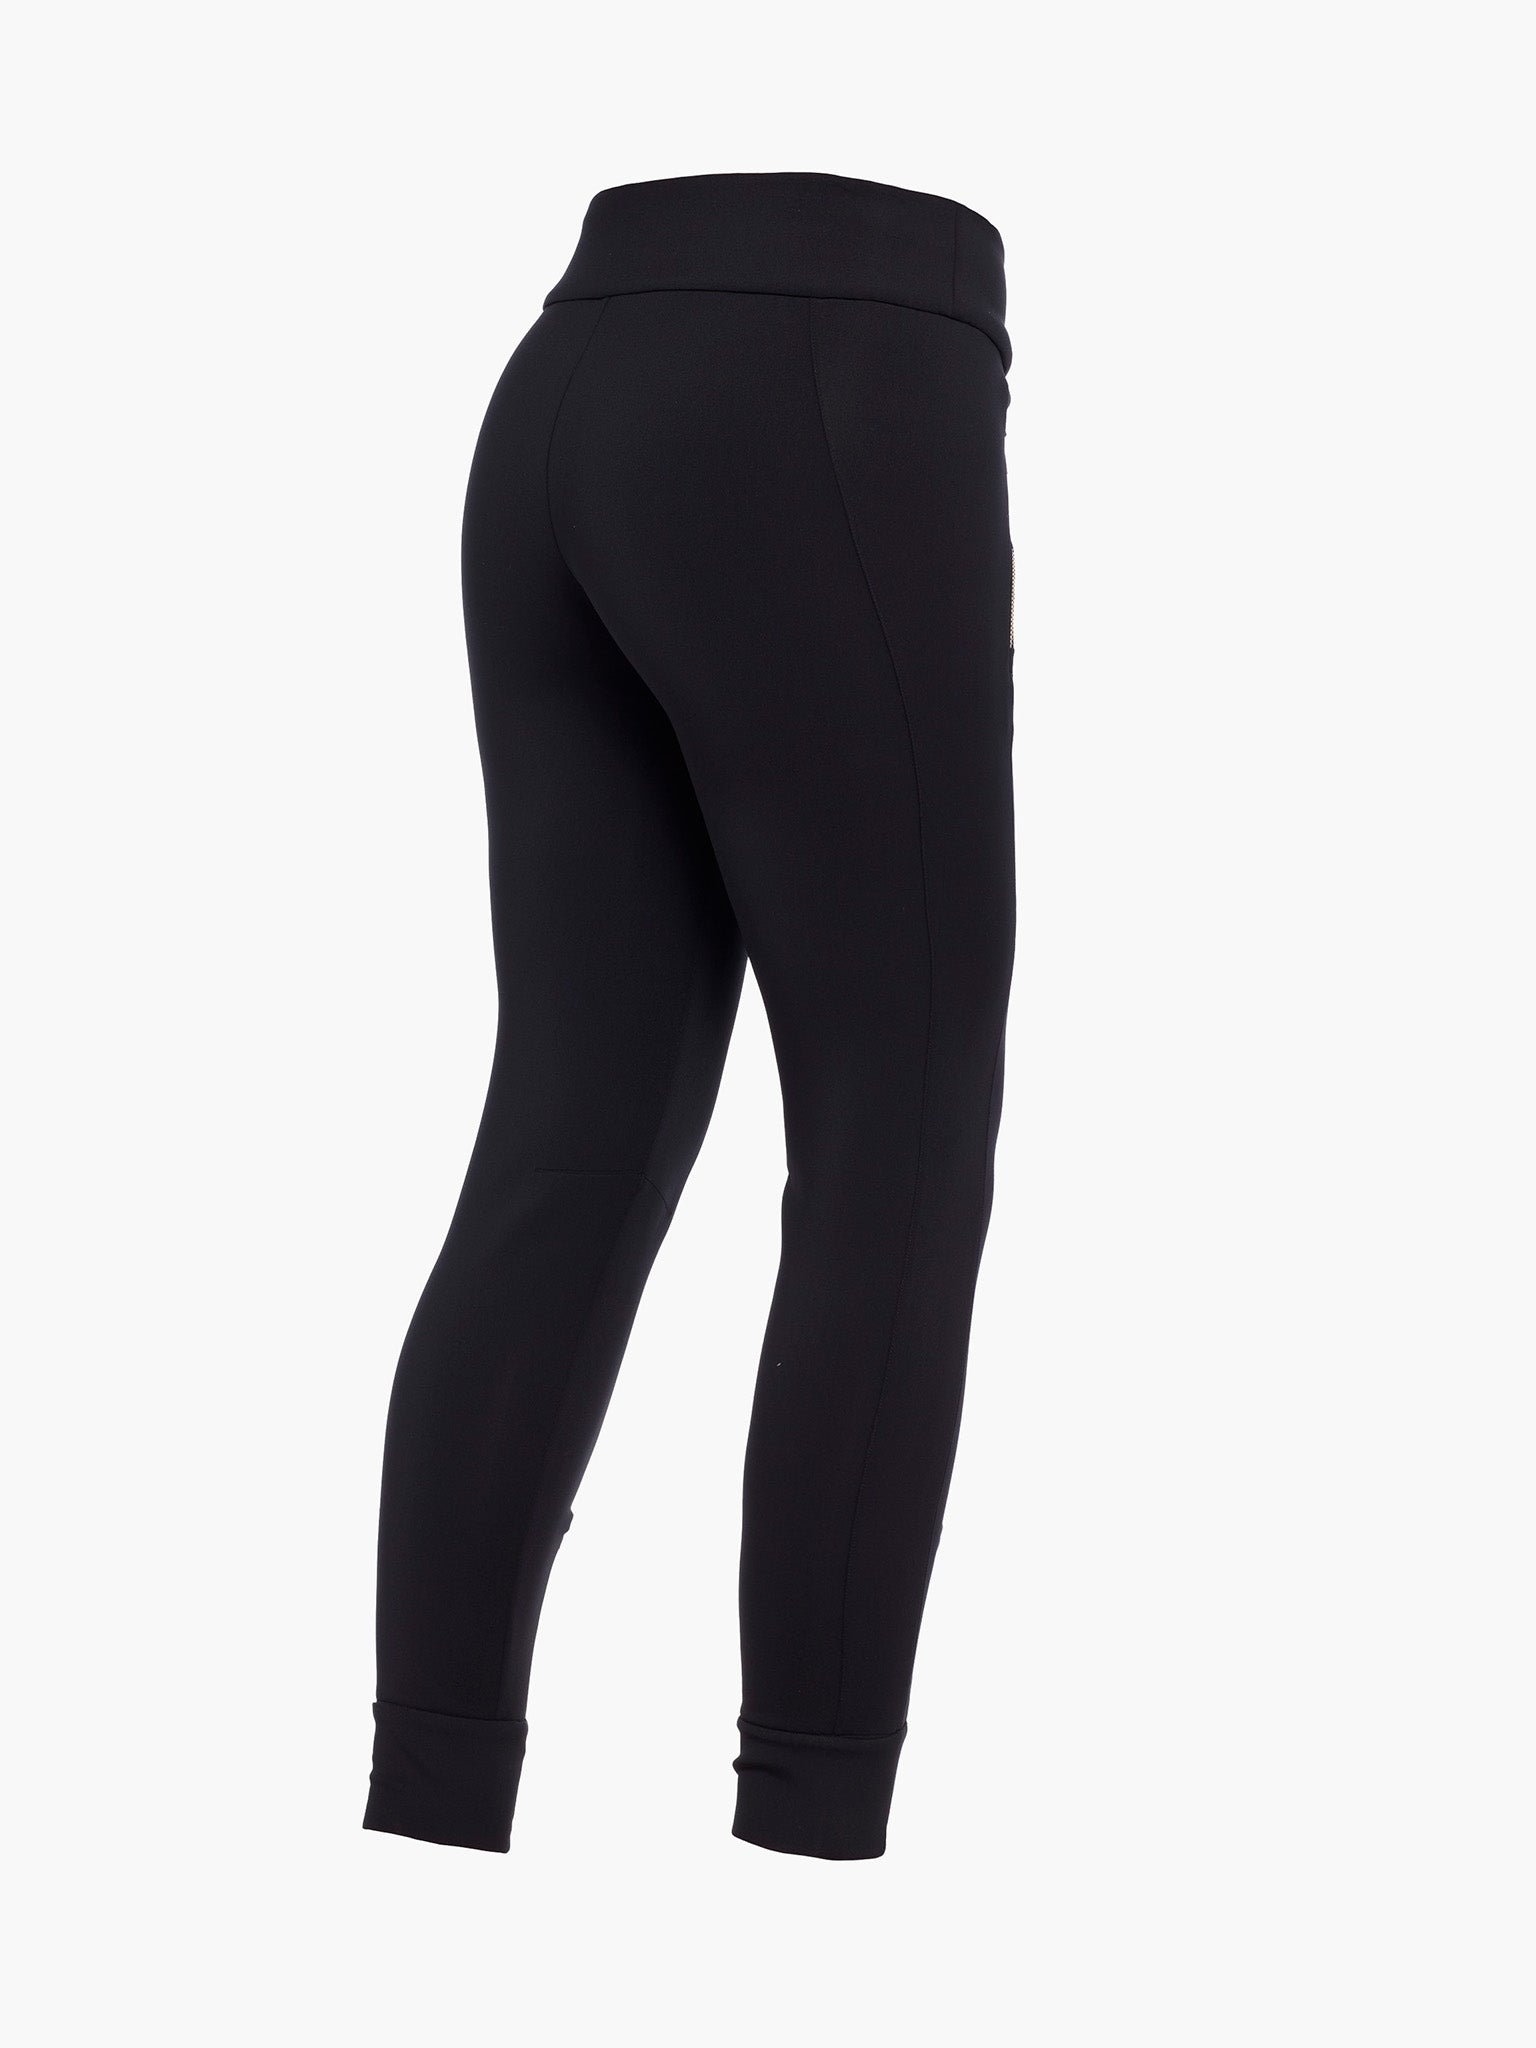 Buy Nike Women's Power Training Pants Black in KSA -SSS